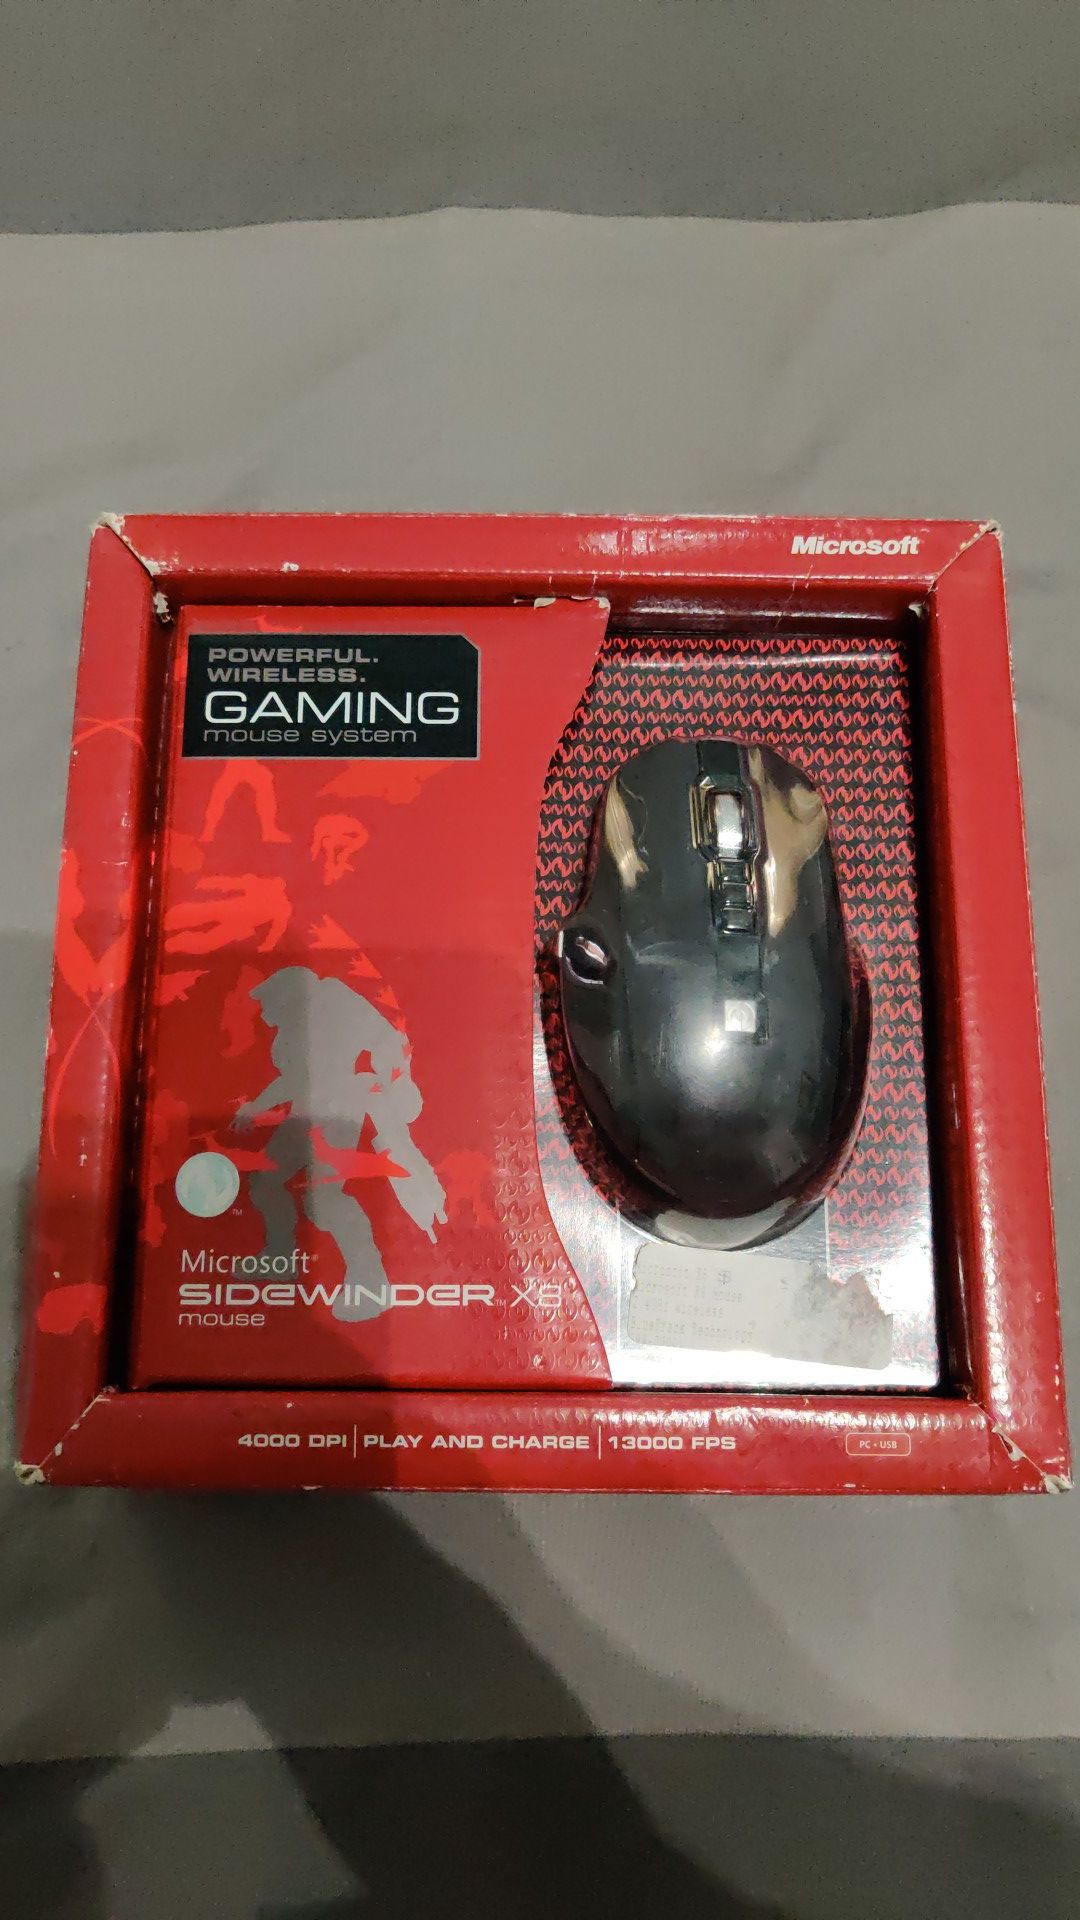 Microsoft Sidewinder X8 wireless gaming mouse